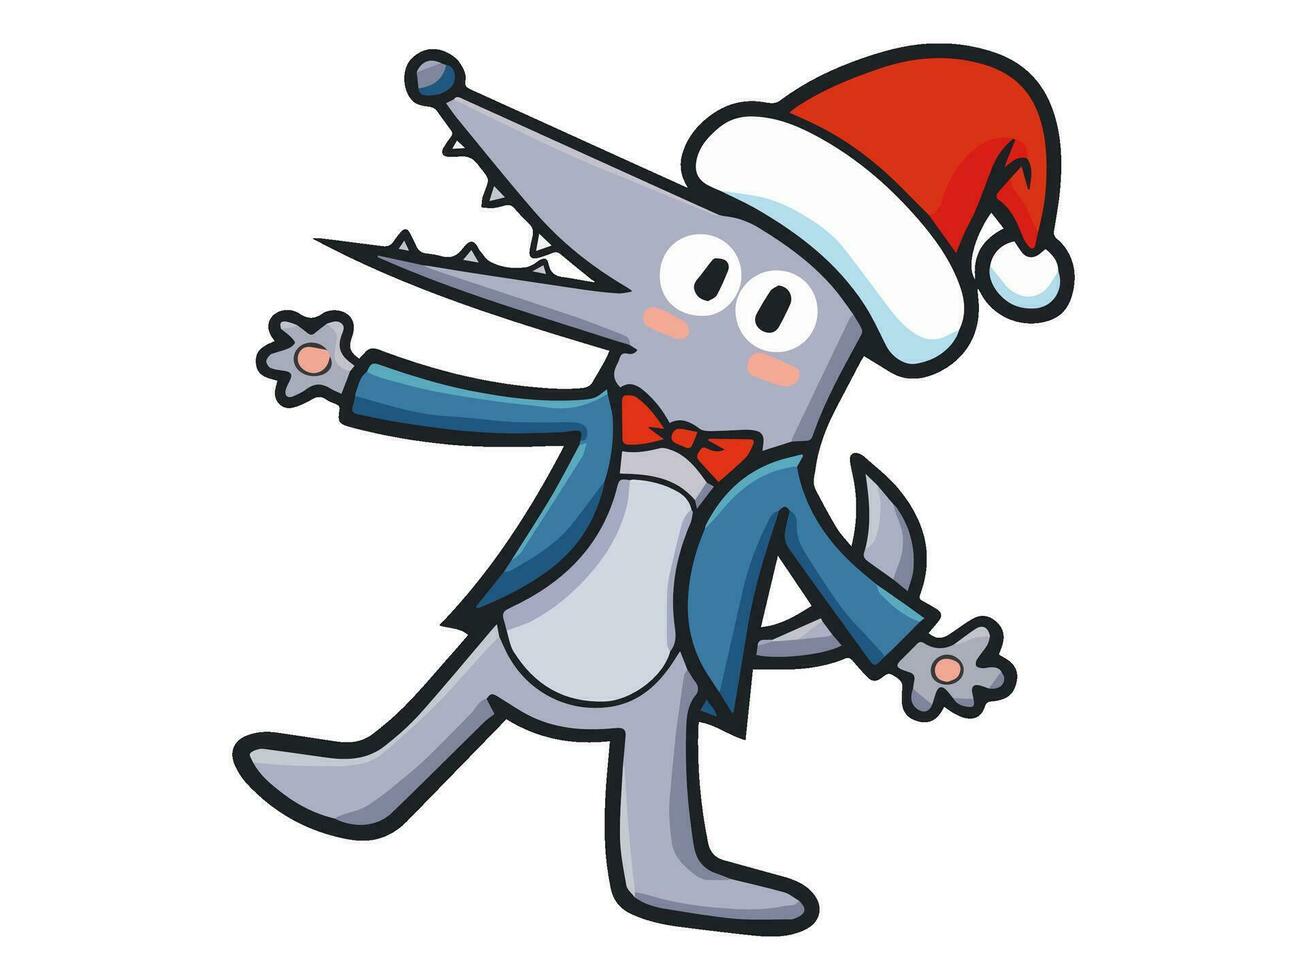 a cartoon animal wearing a santa hat vector